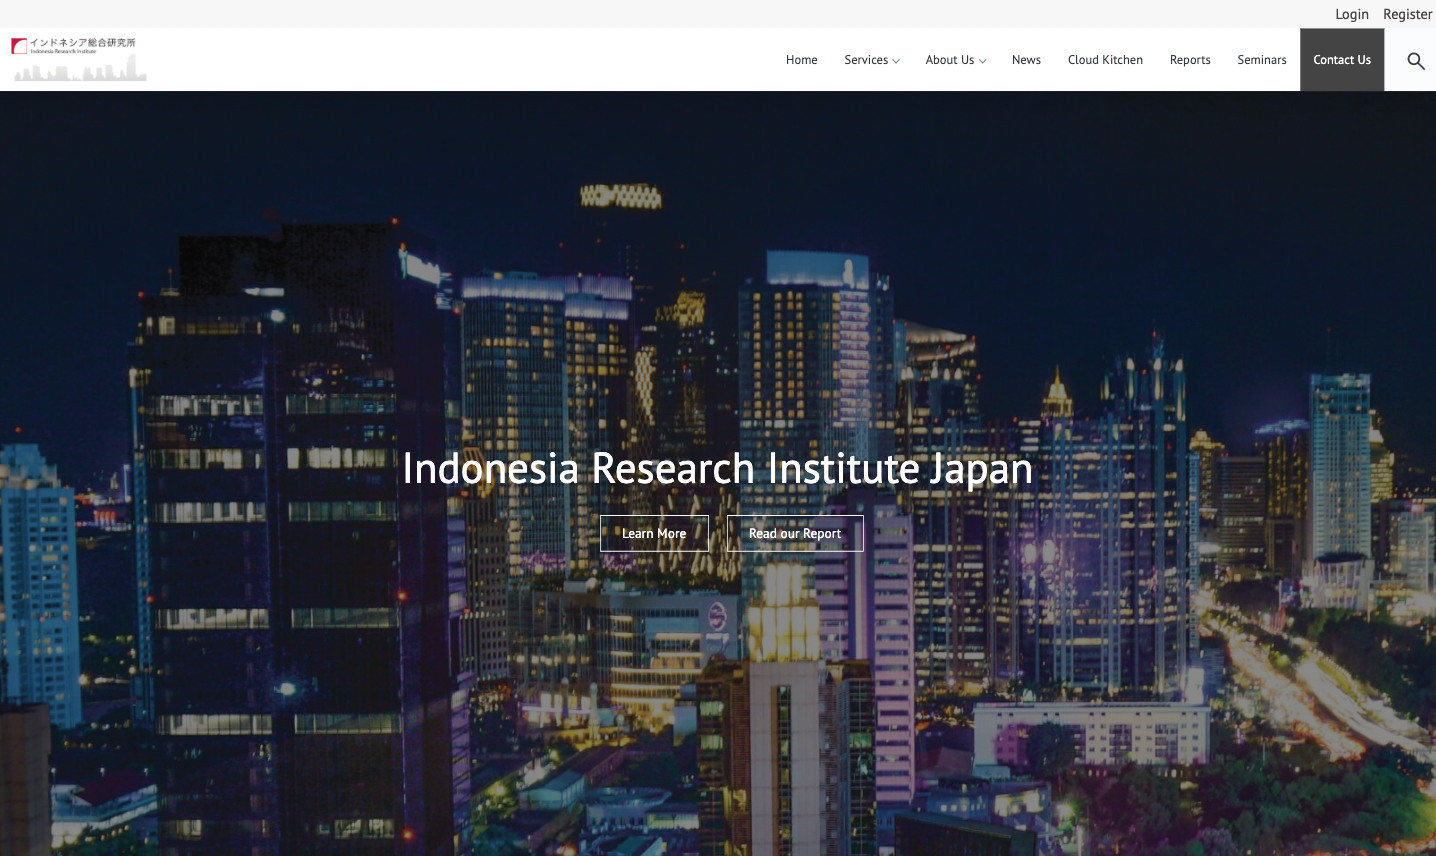 Indonesia Research Institute Japan Website